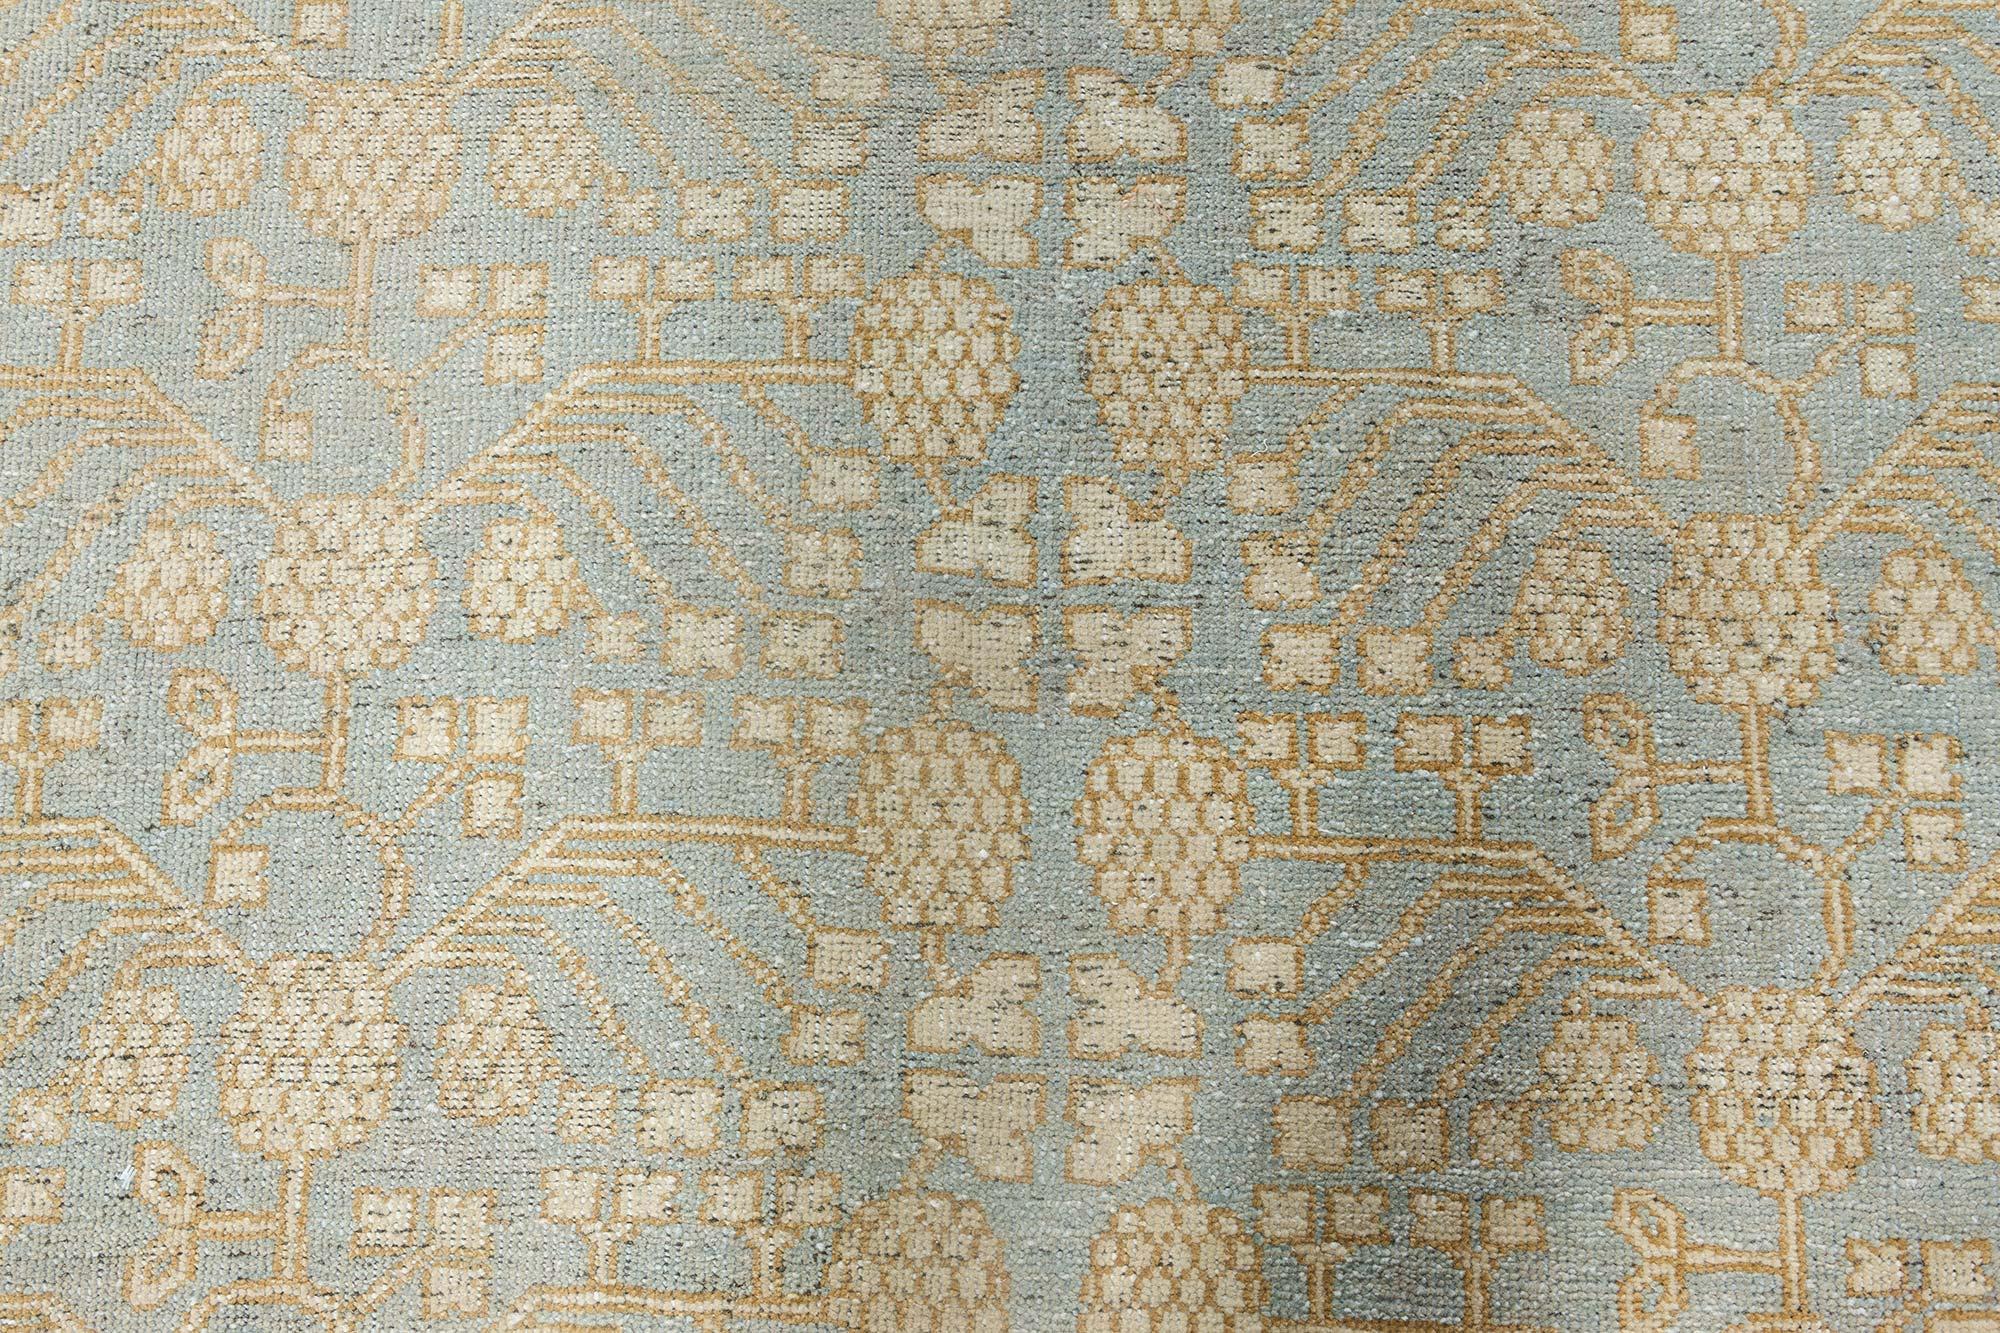 Indian Contemporary Samarkand Traditional Design Handmade Wool Rug by Doris Leslie Blau For Sale